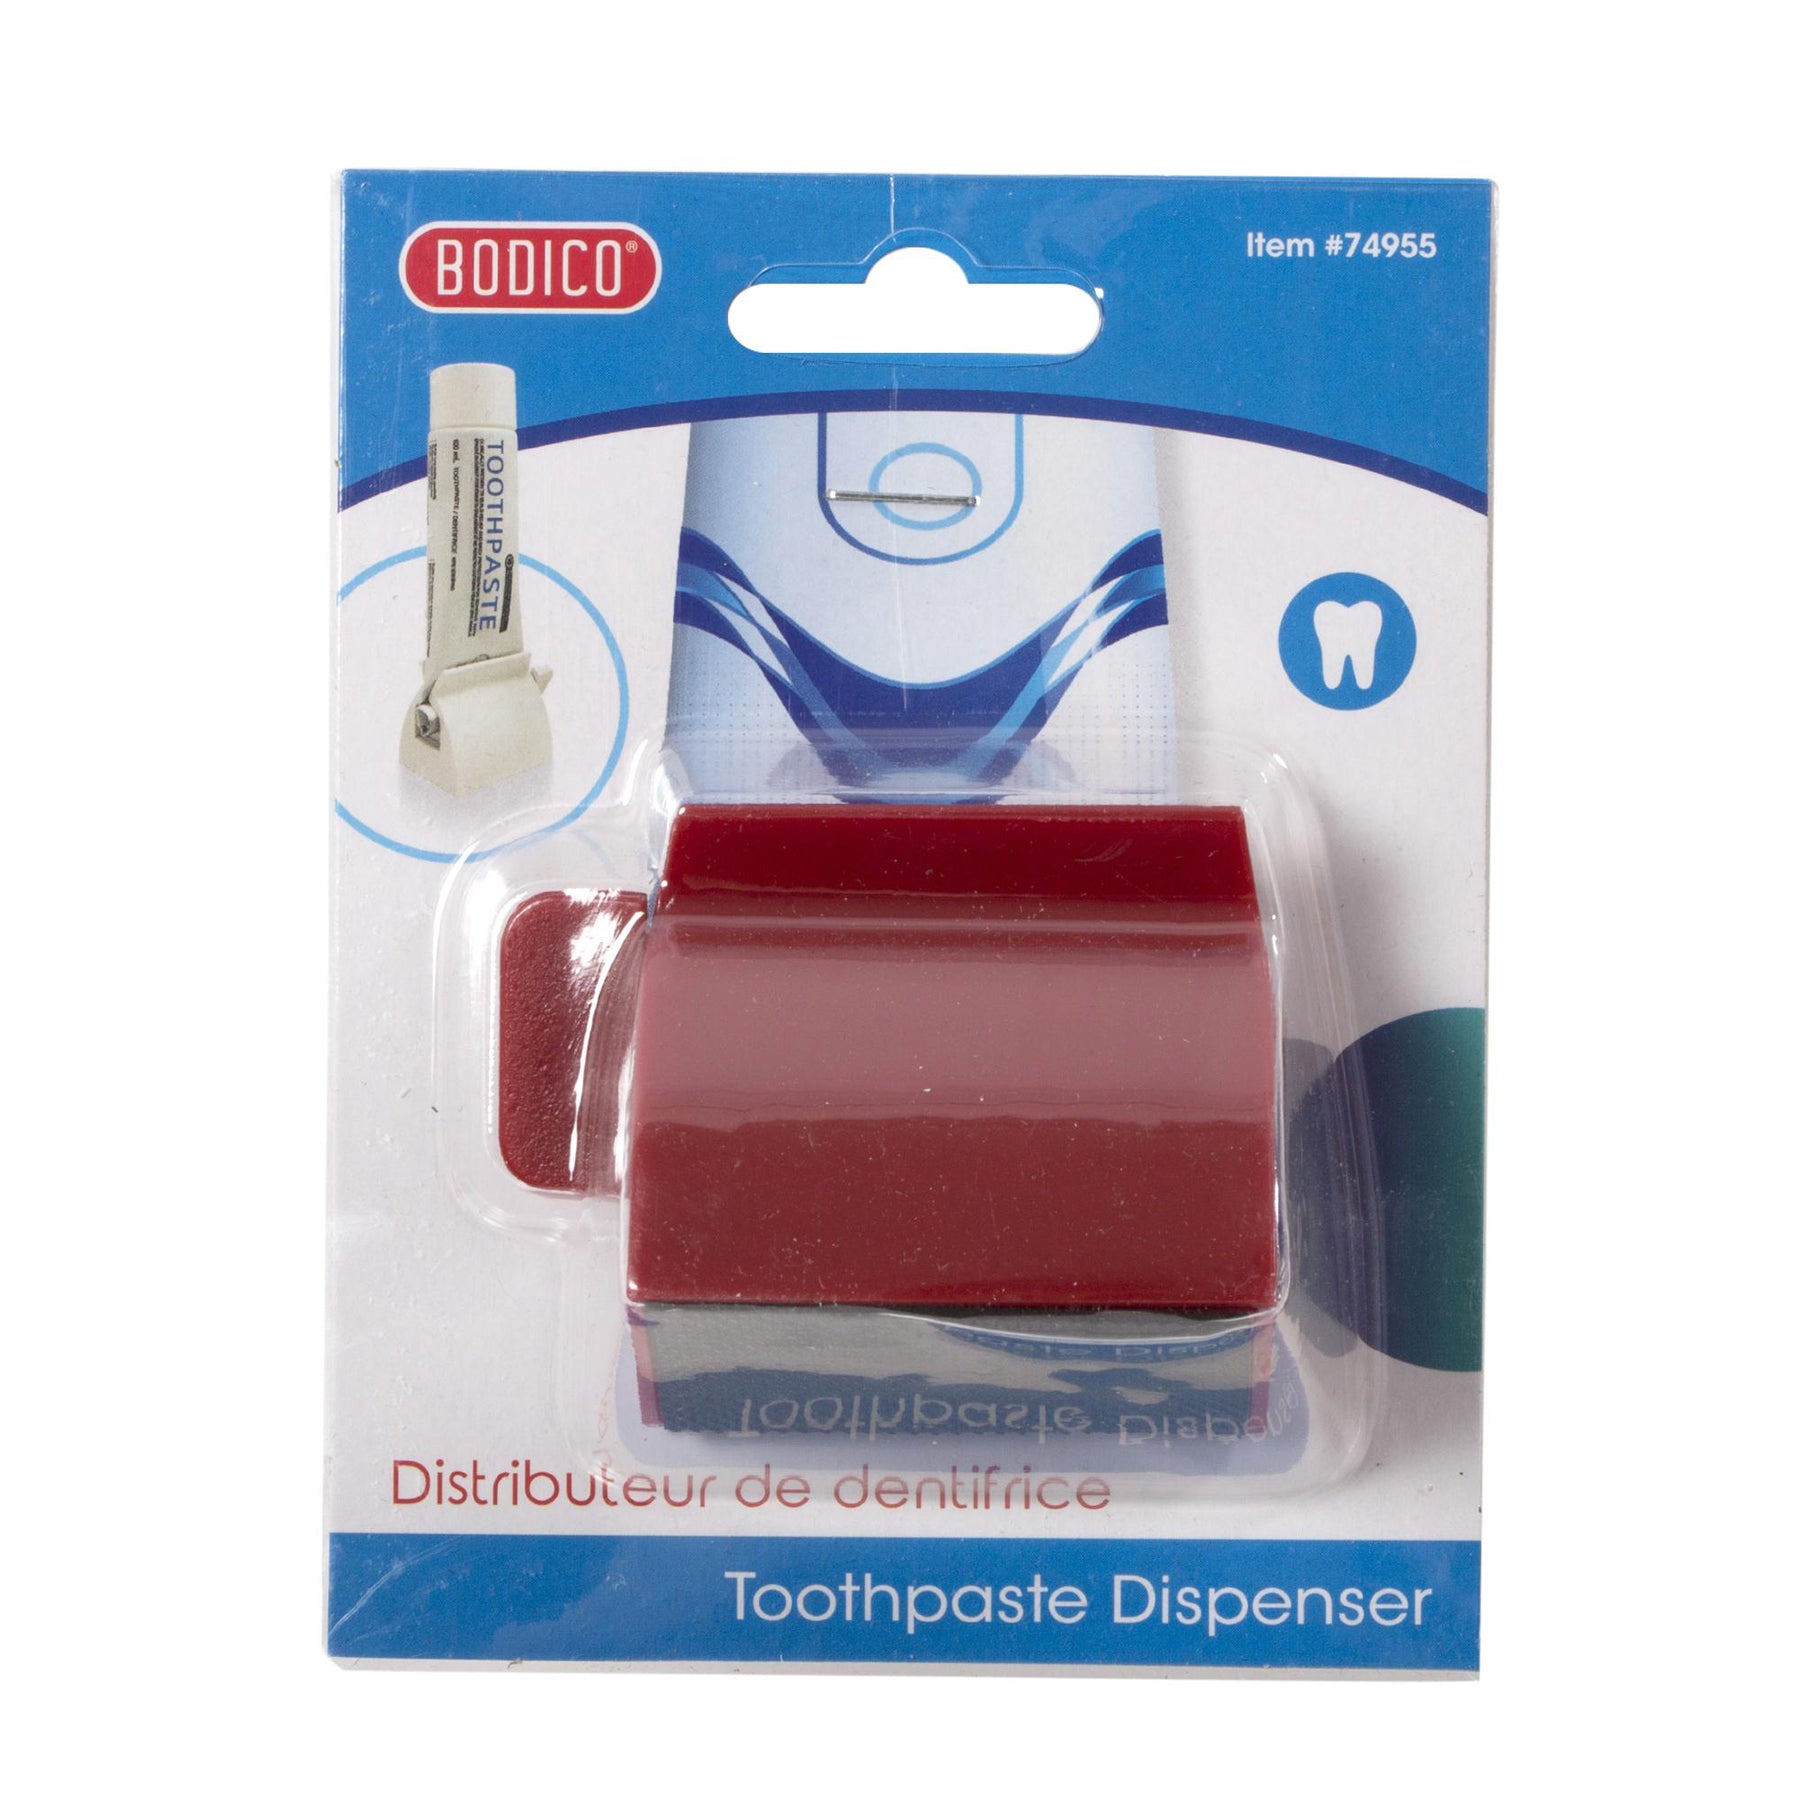 Bodico Toothpaste Dispenser 2.5x1.6x2in